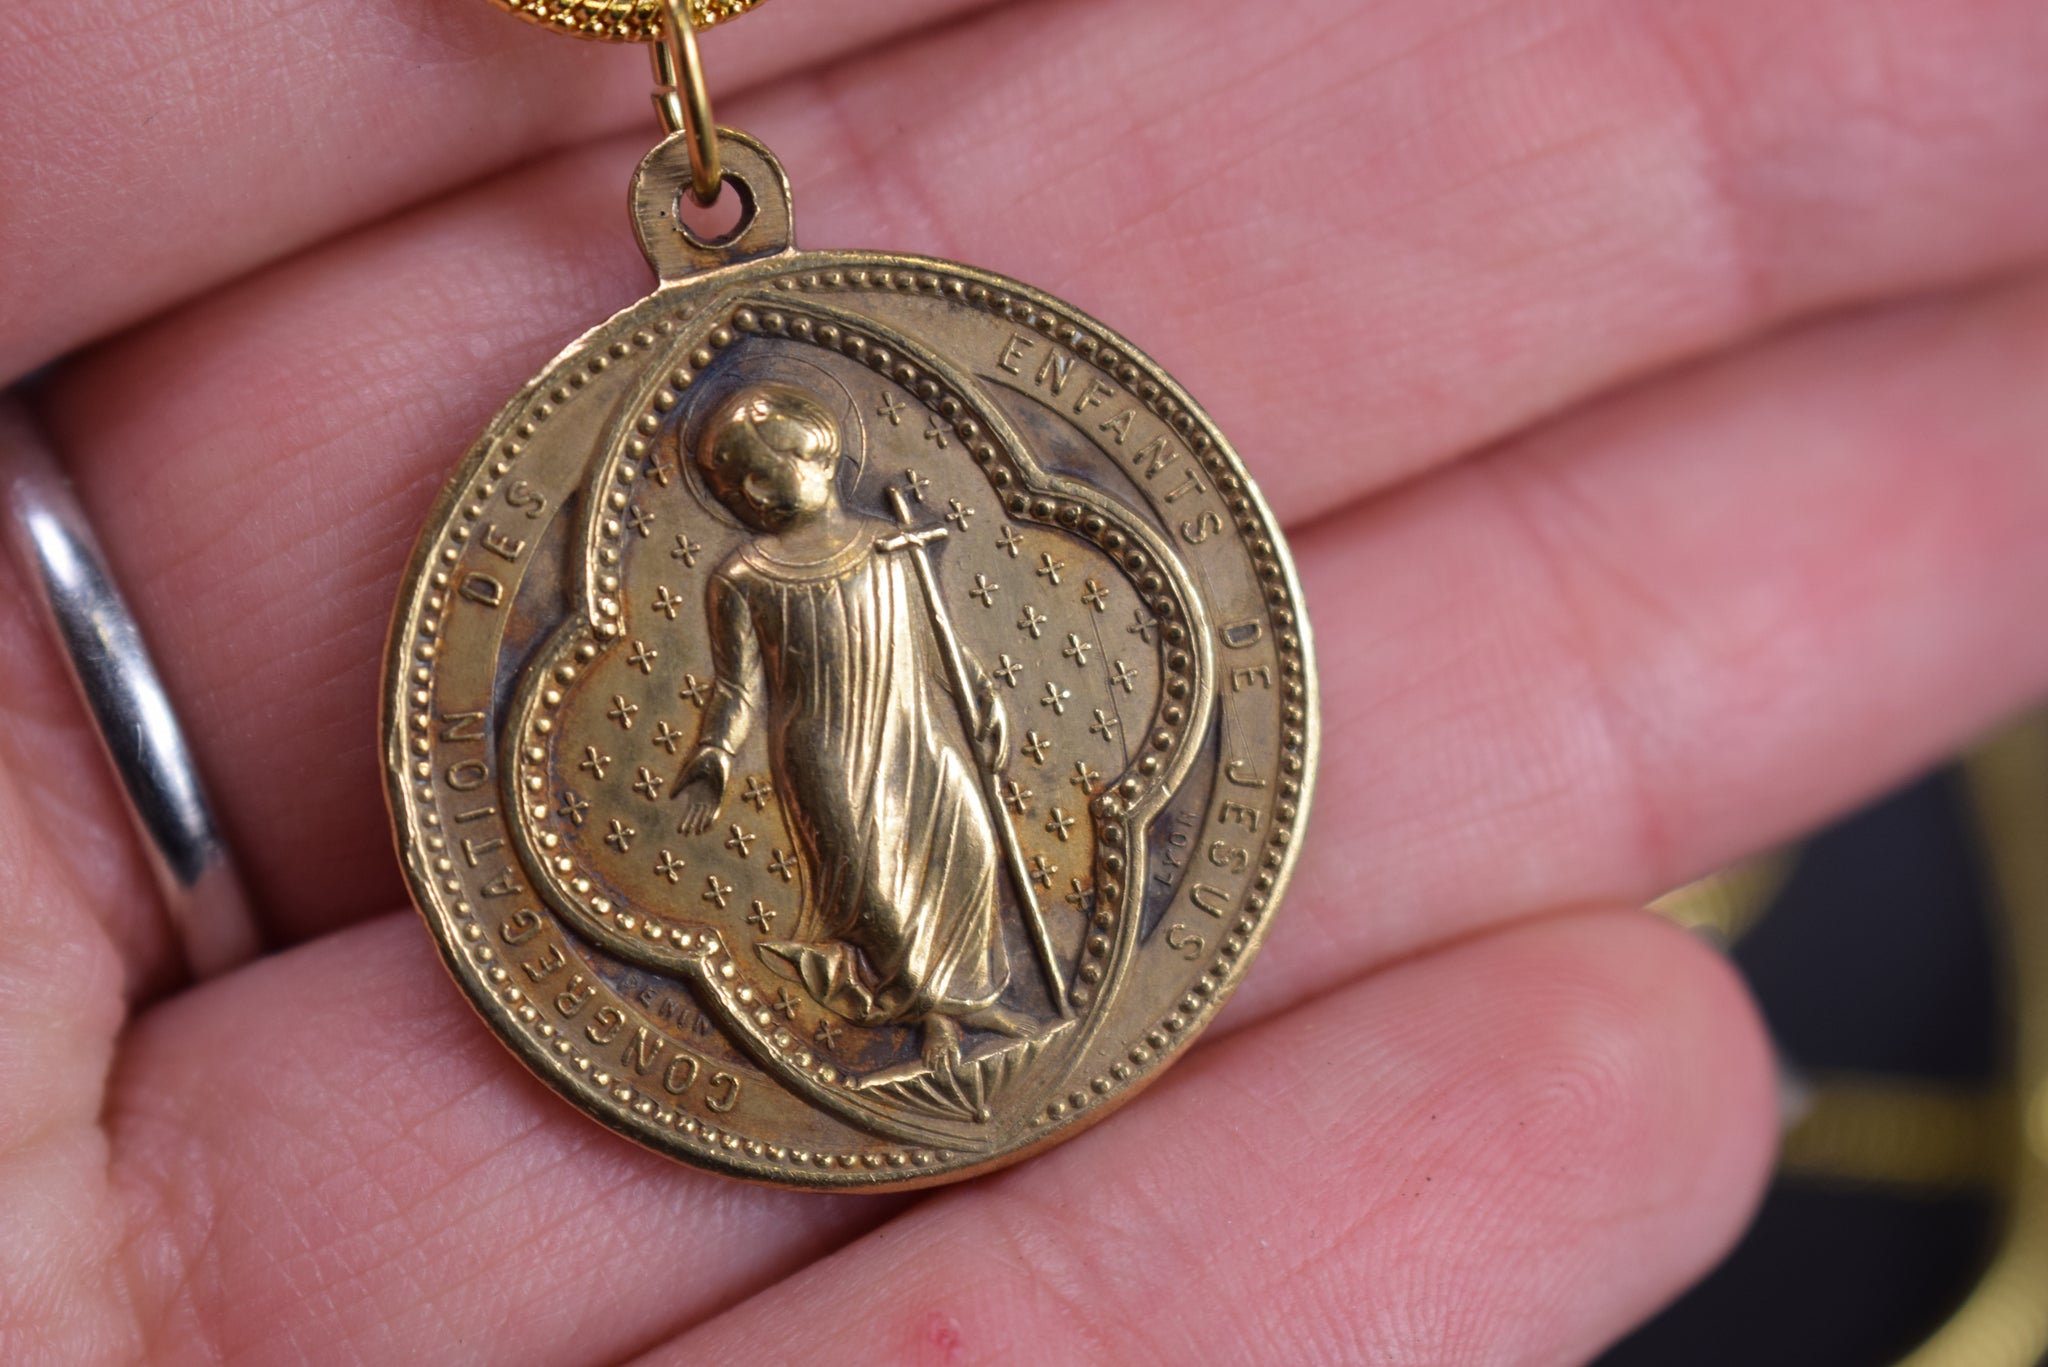 Jesus Child Medal by Penin